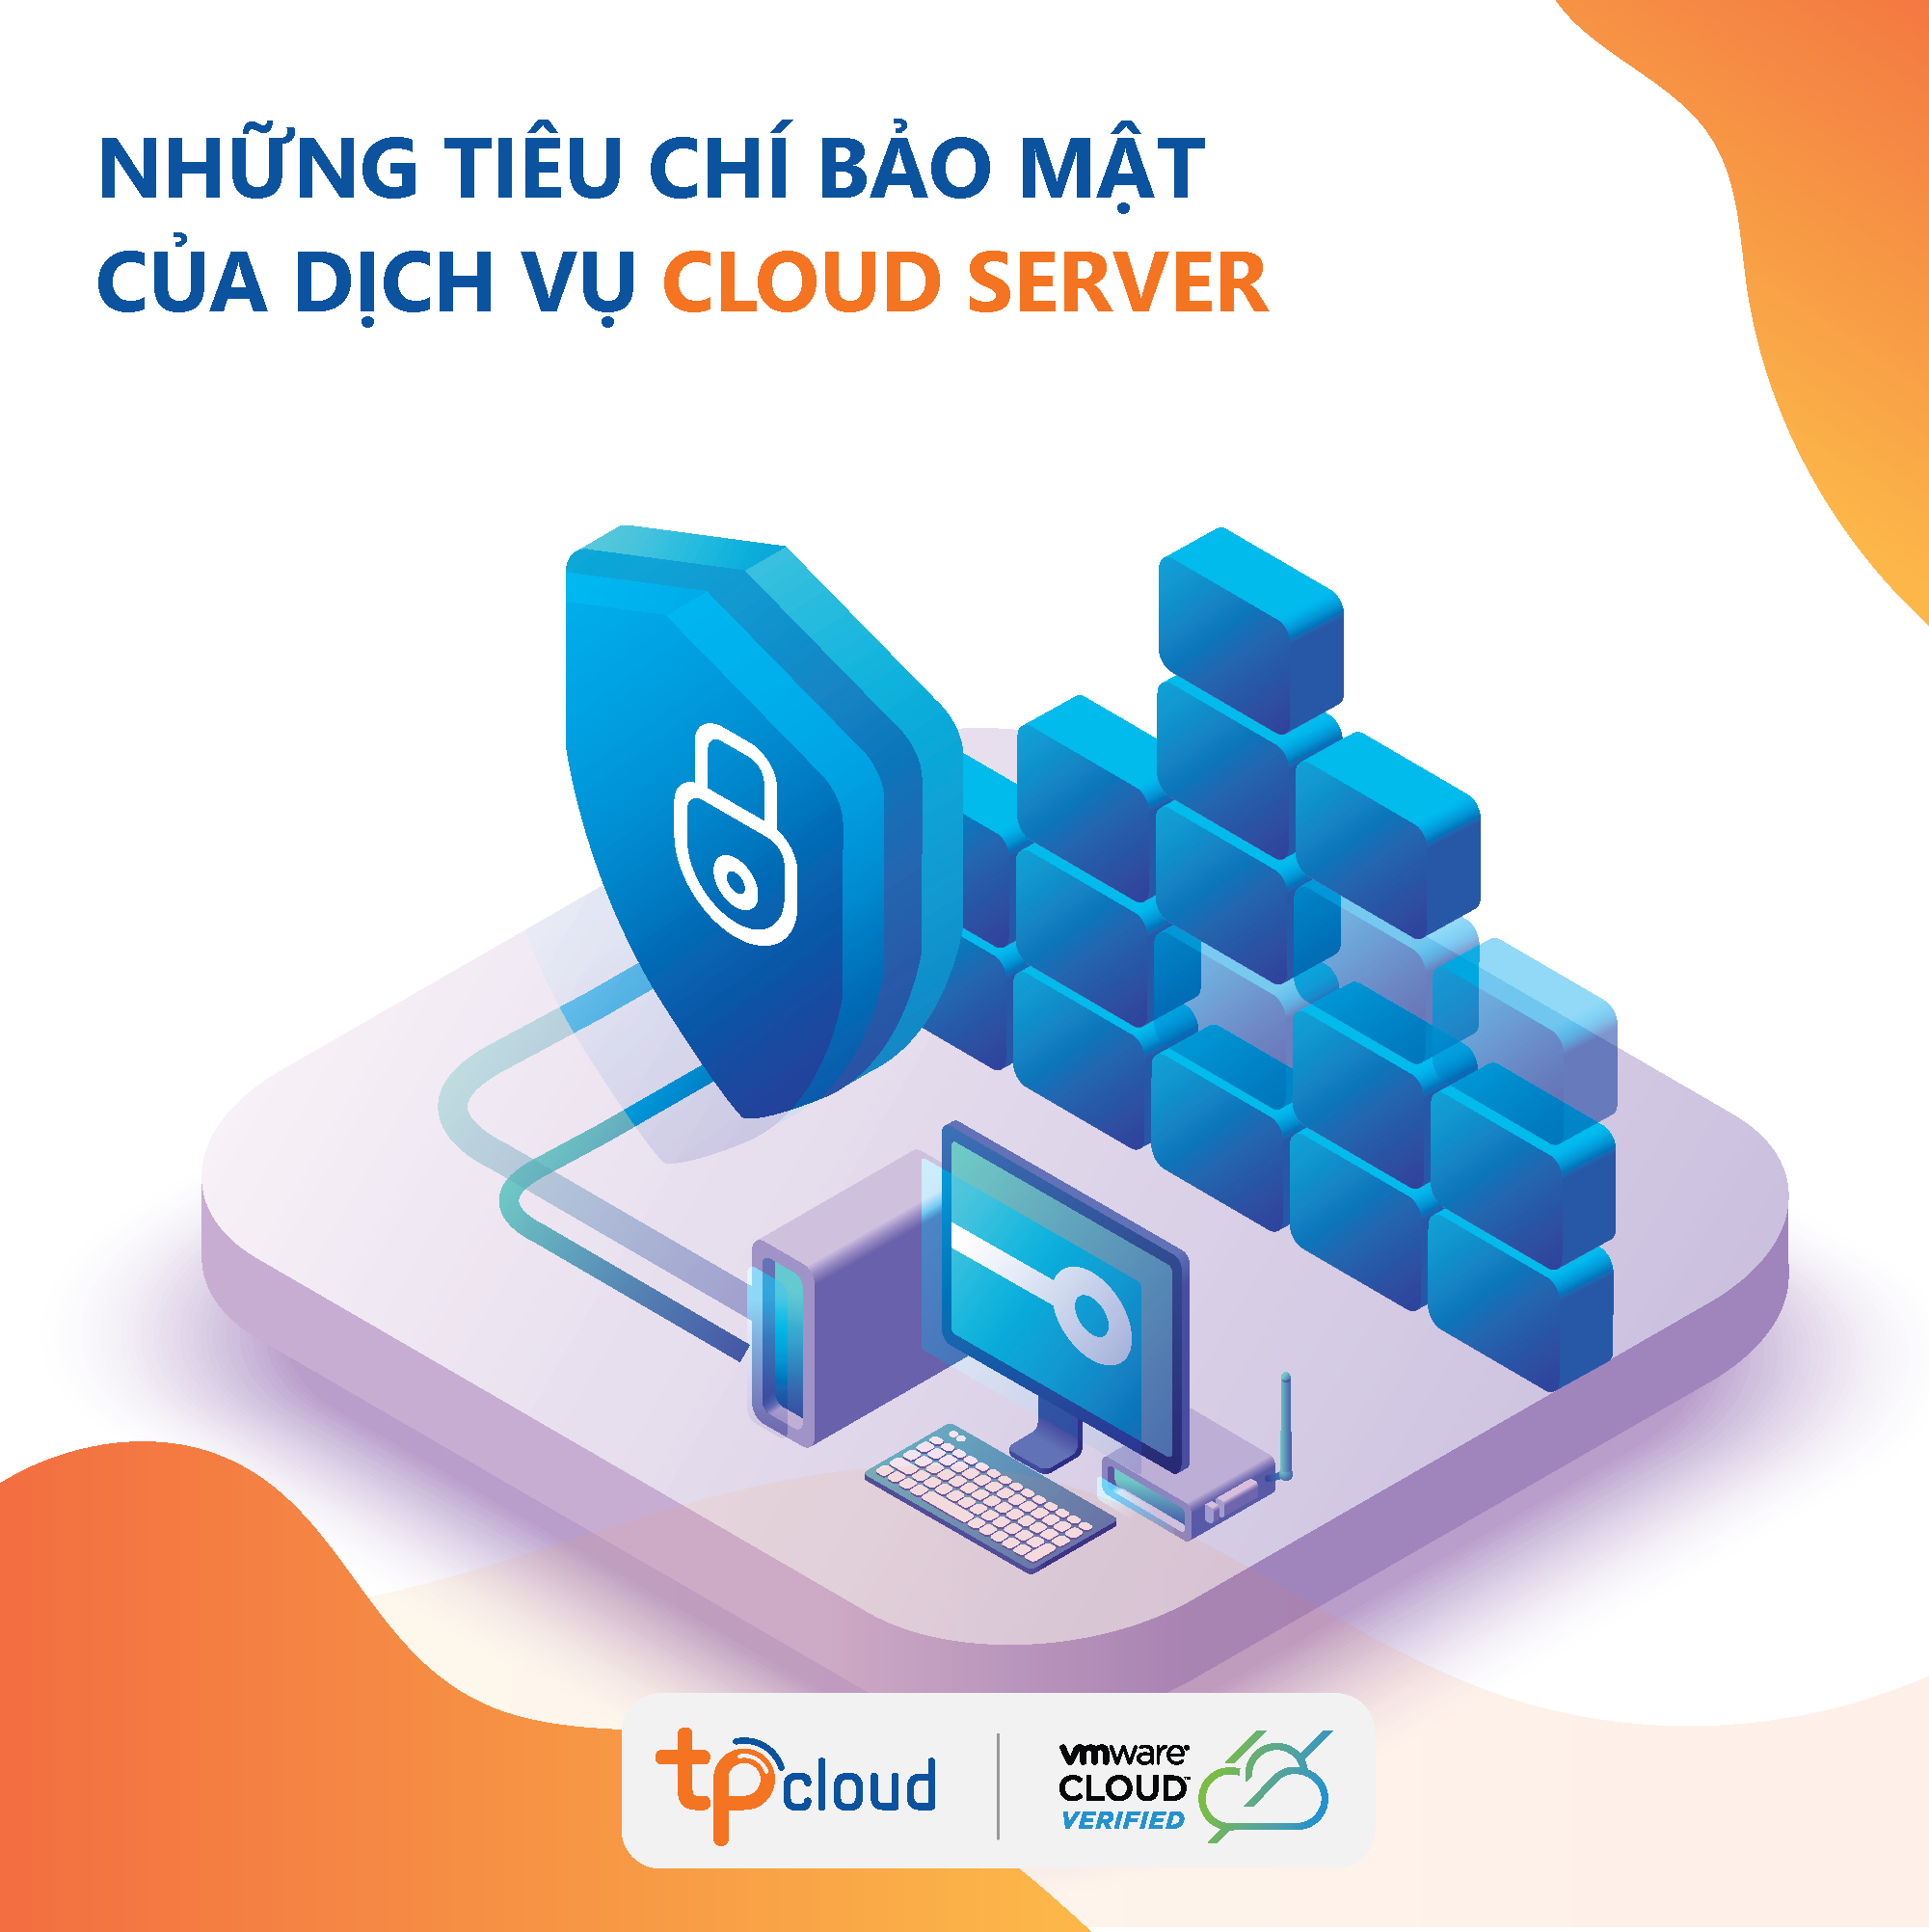 nhung-tieu-chi-bao-mat-cua-dich-vu-cloud-server